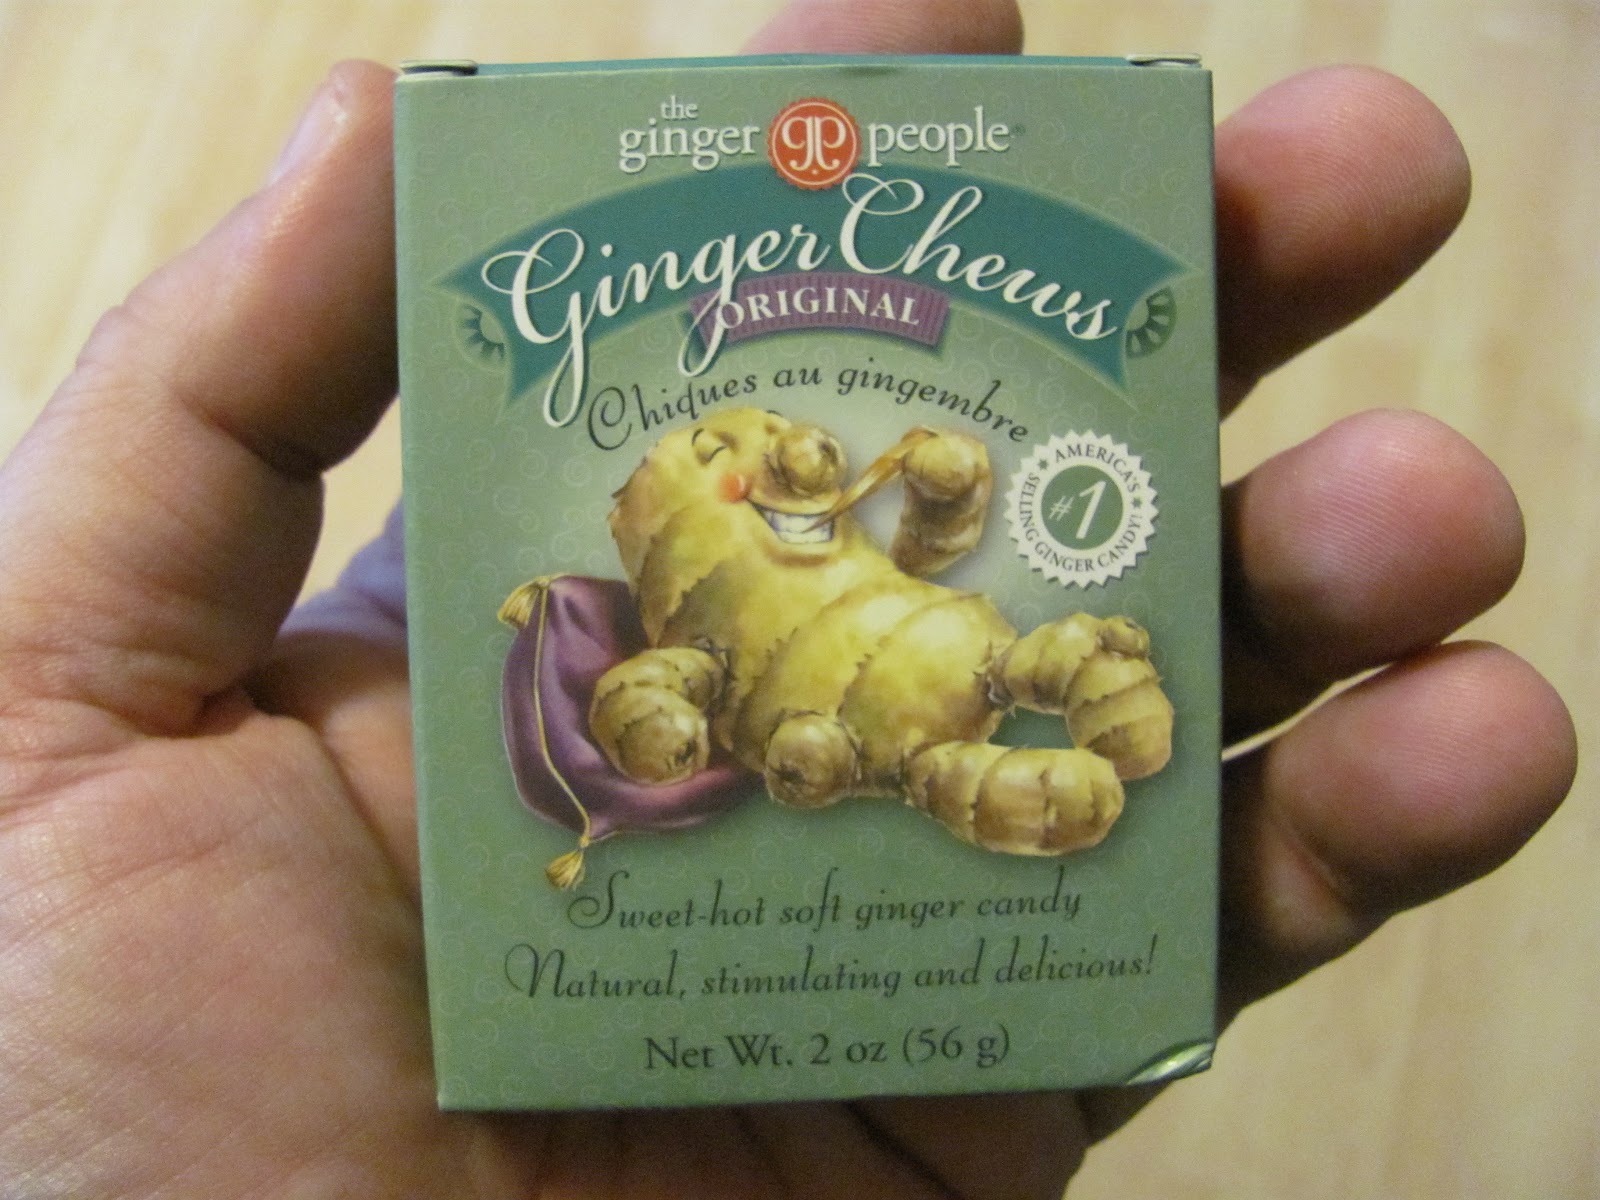 ginger chews recipe